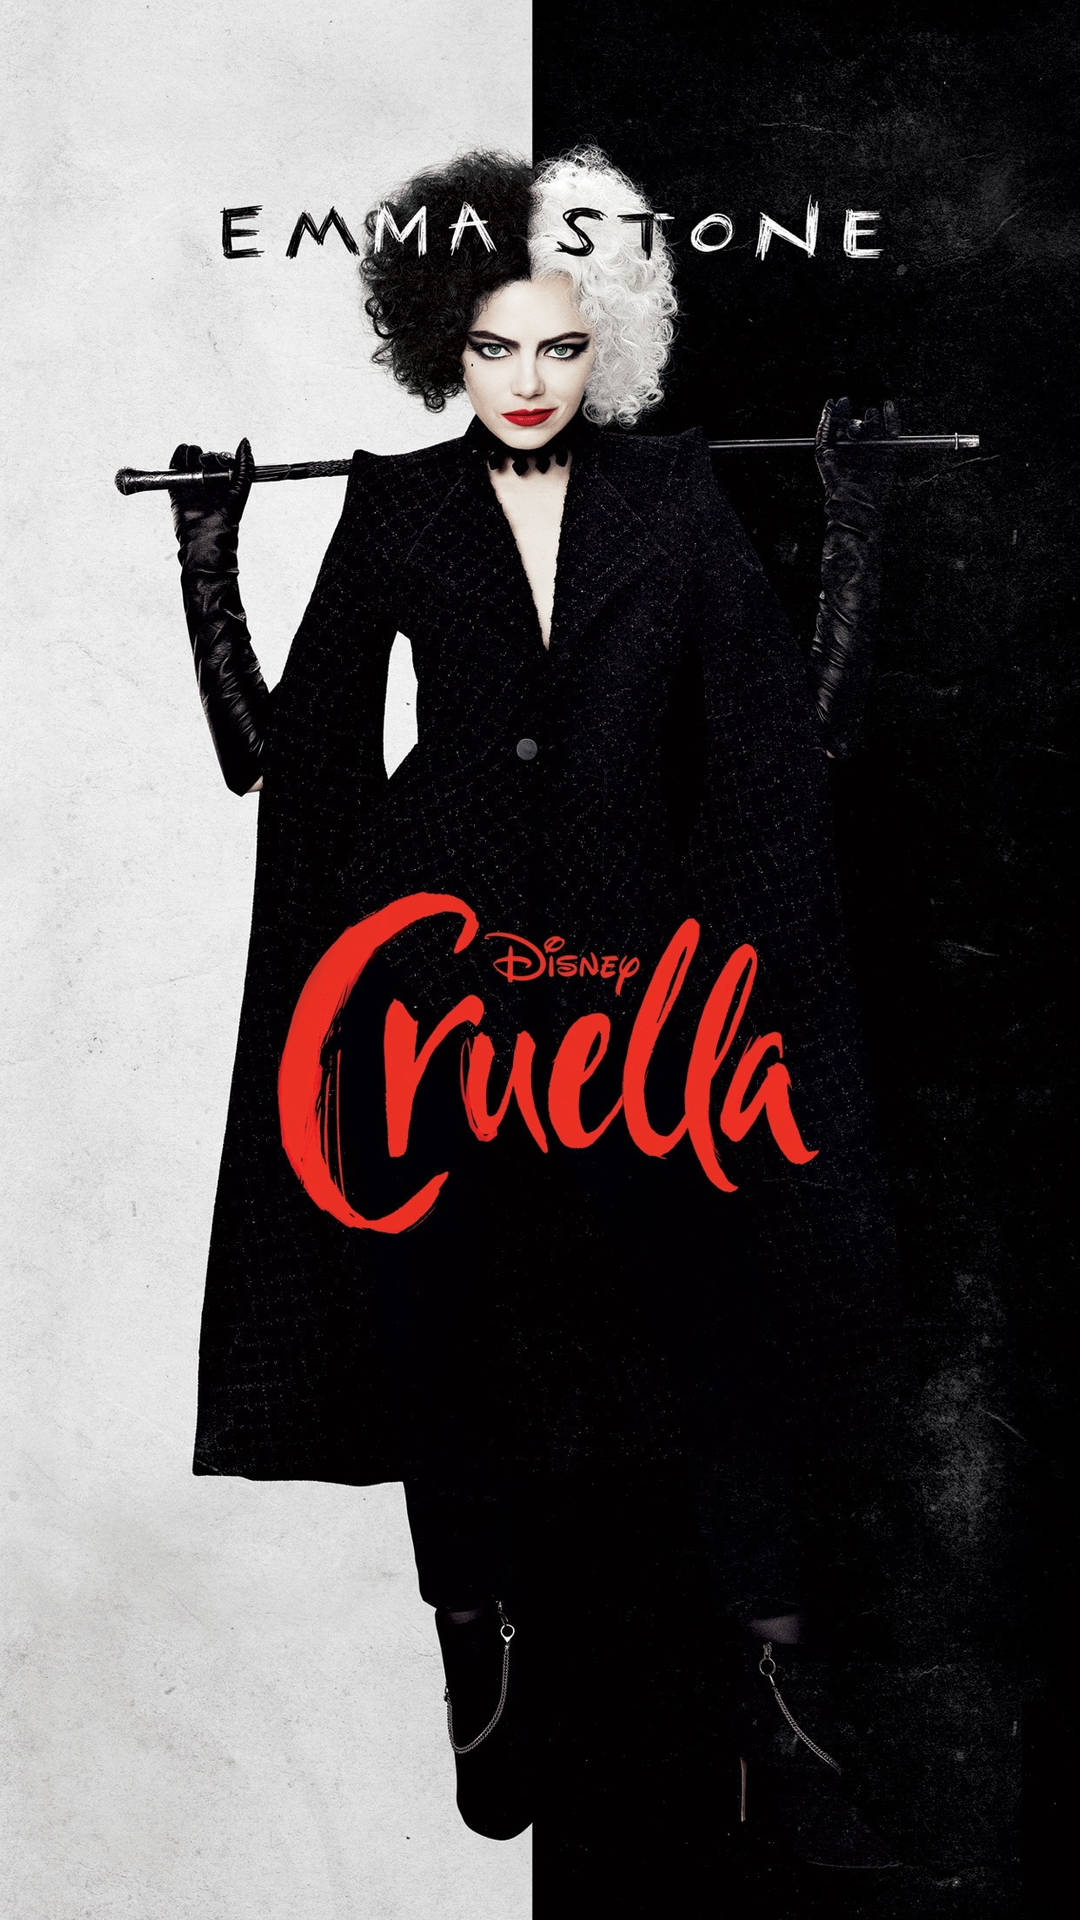 Empowered and Enigmatic - Emma Stone as Cruella Wallpaper